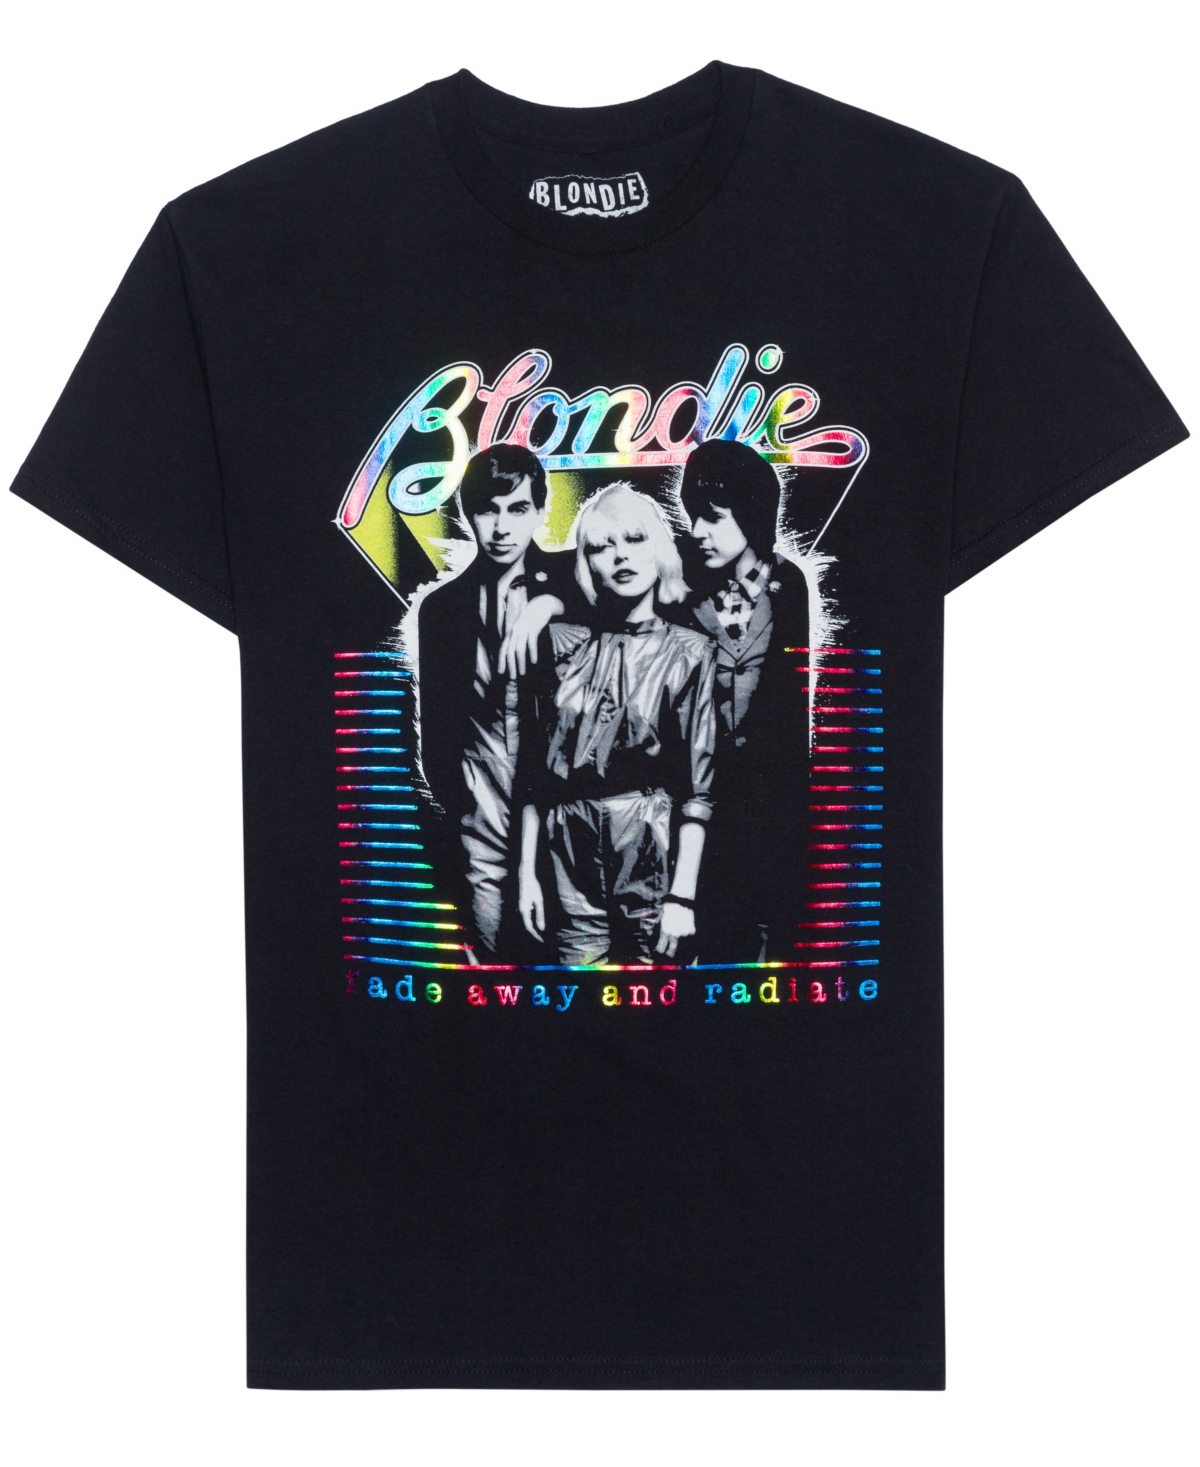 Hybrid Men's Blondie Short Sleeve Graphic T-shirt